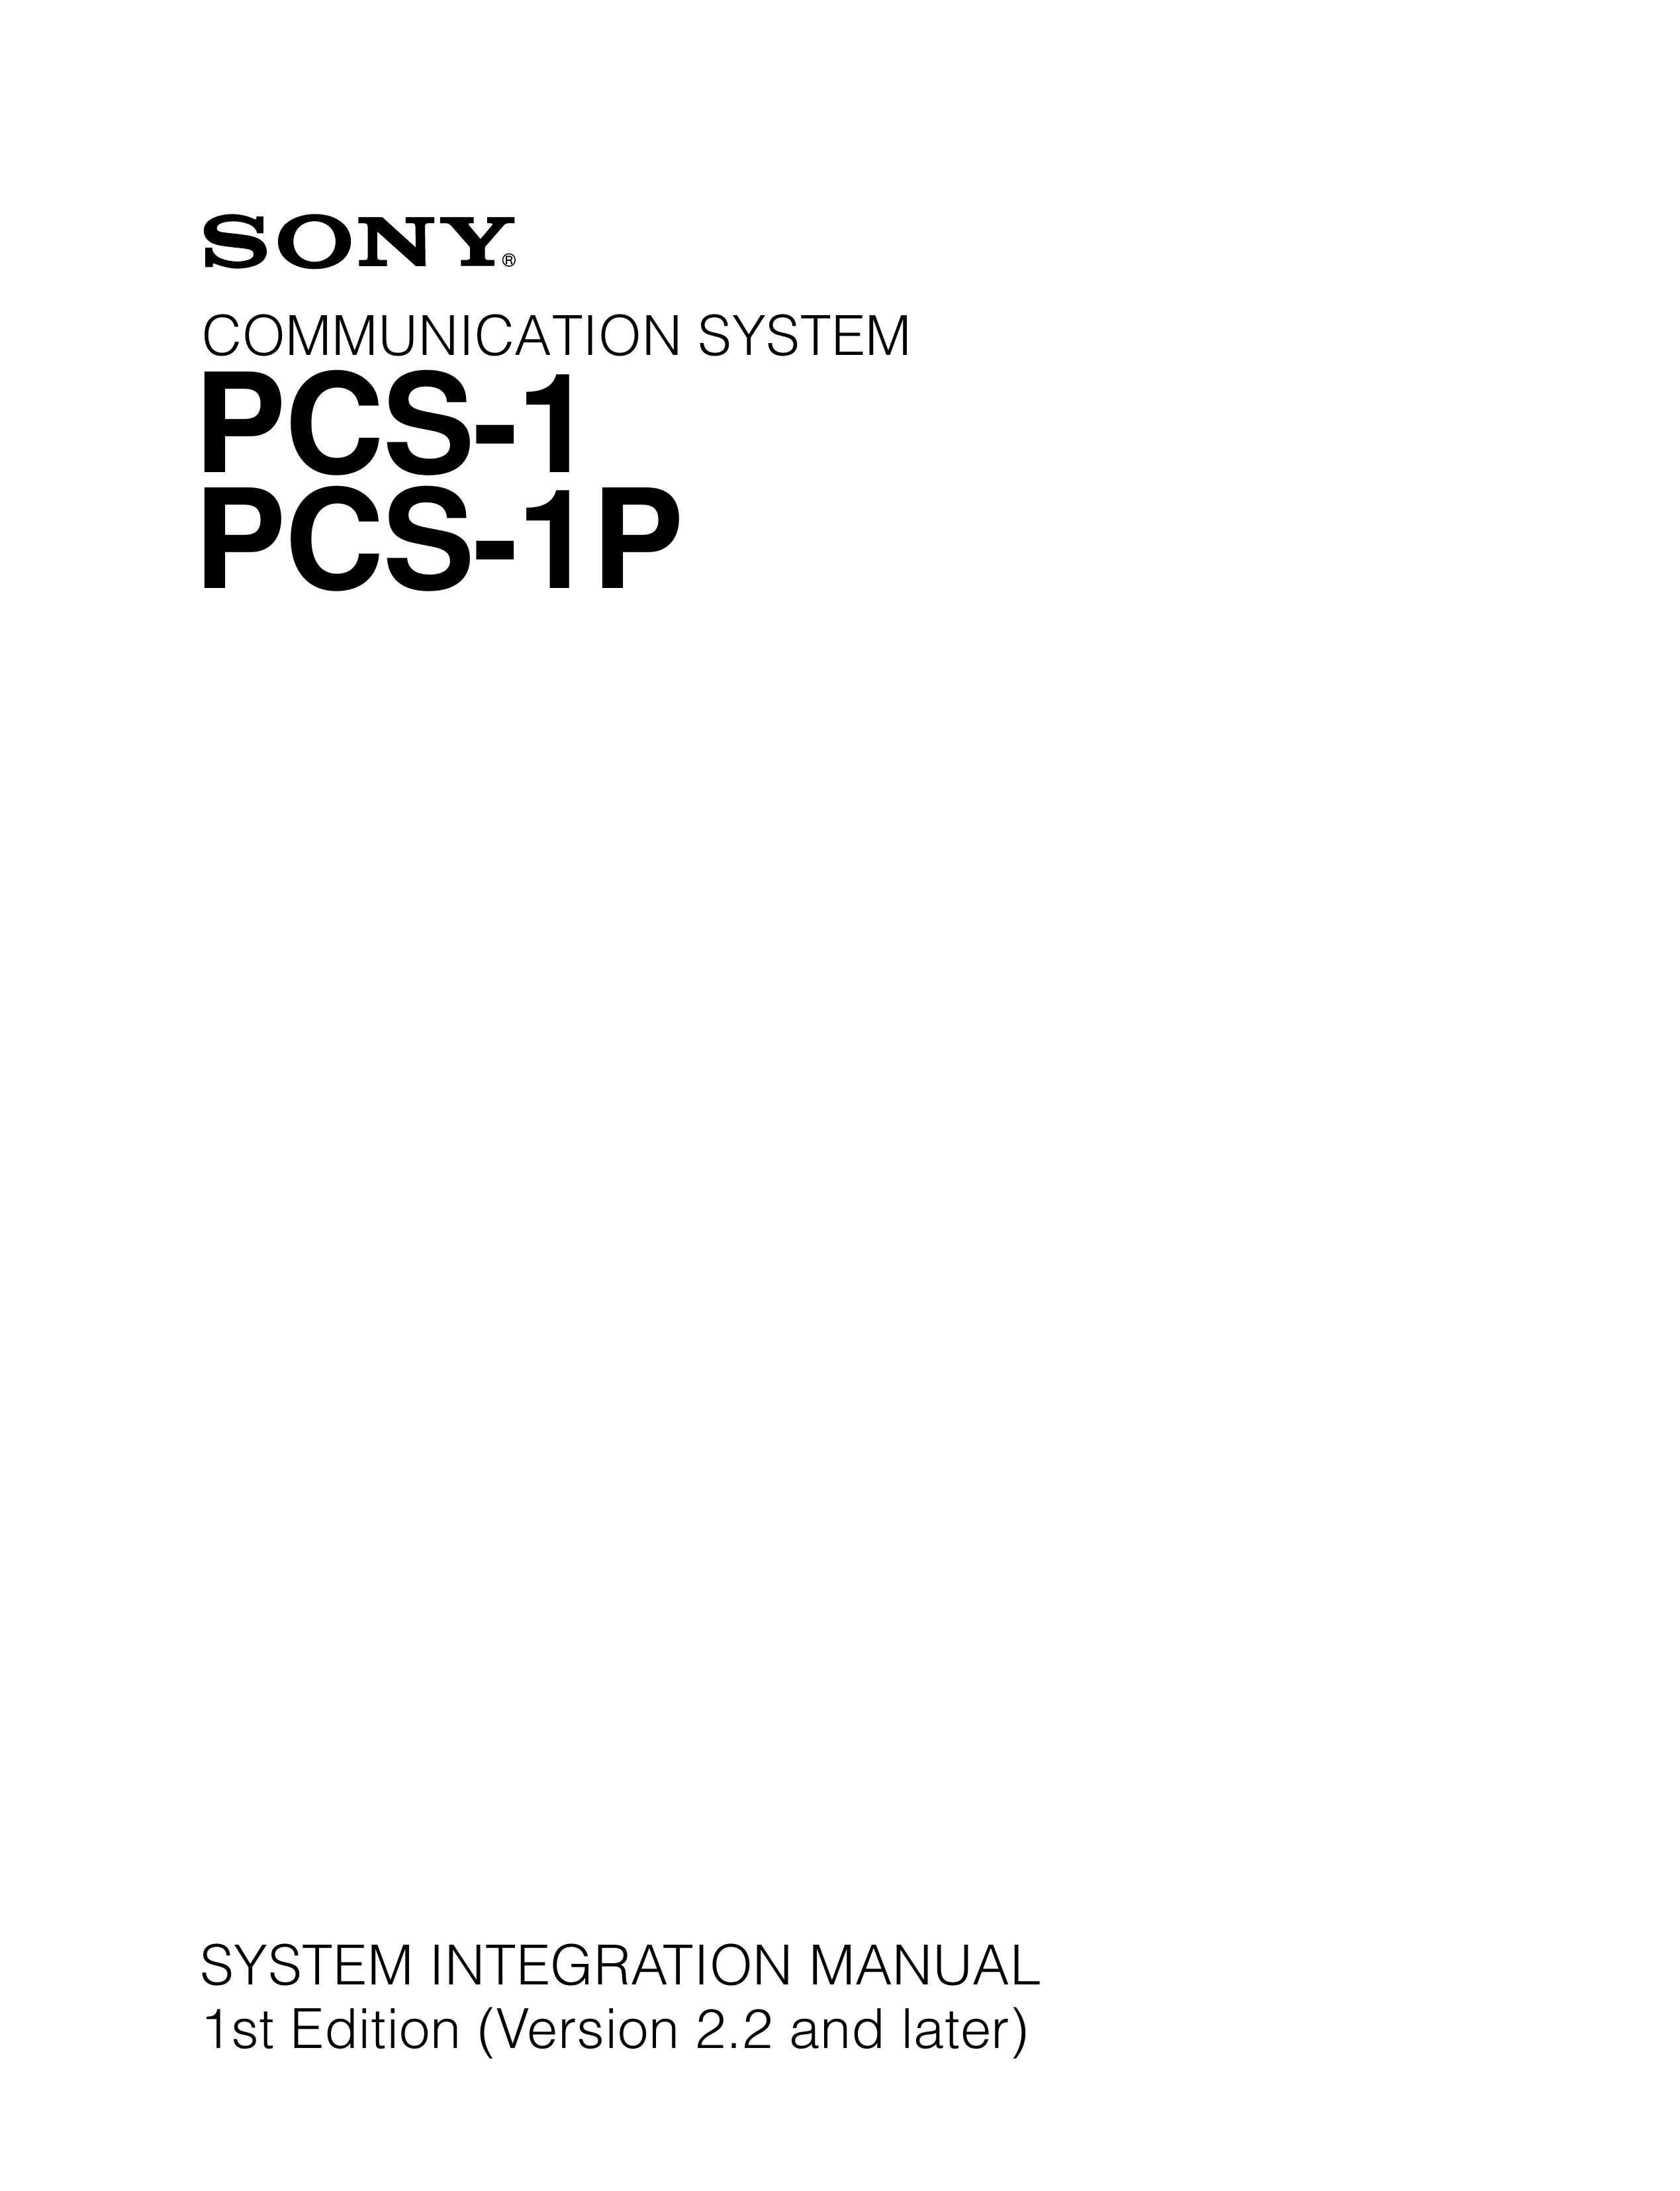 Sony PCS-1P Marine Radio User Manual